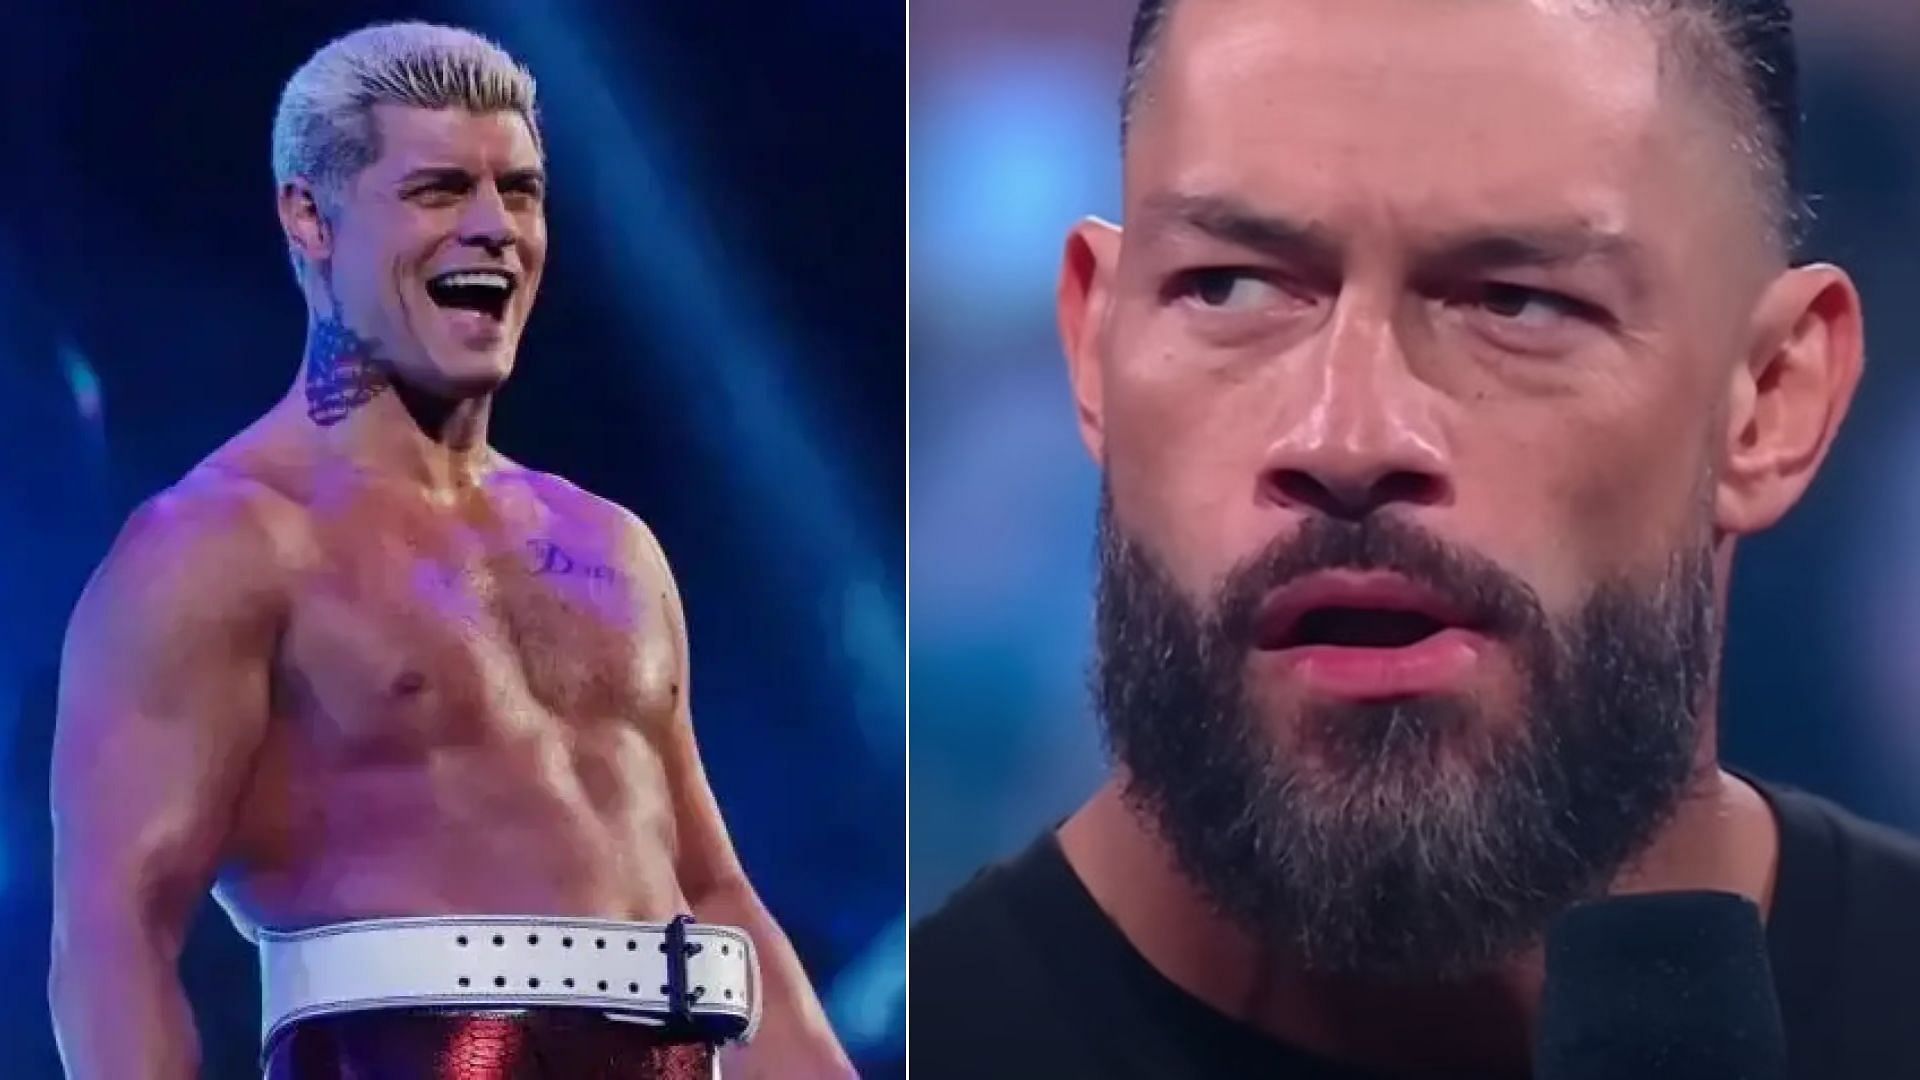 Cody Rhodes versus Roman Reigns is a fresh matchup